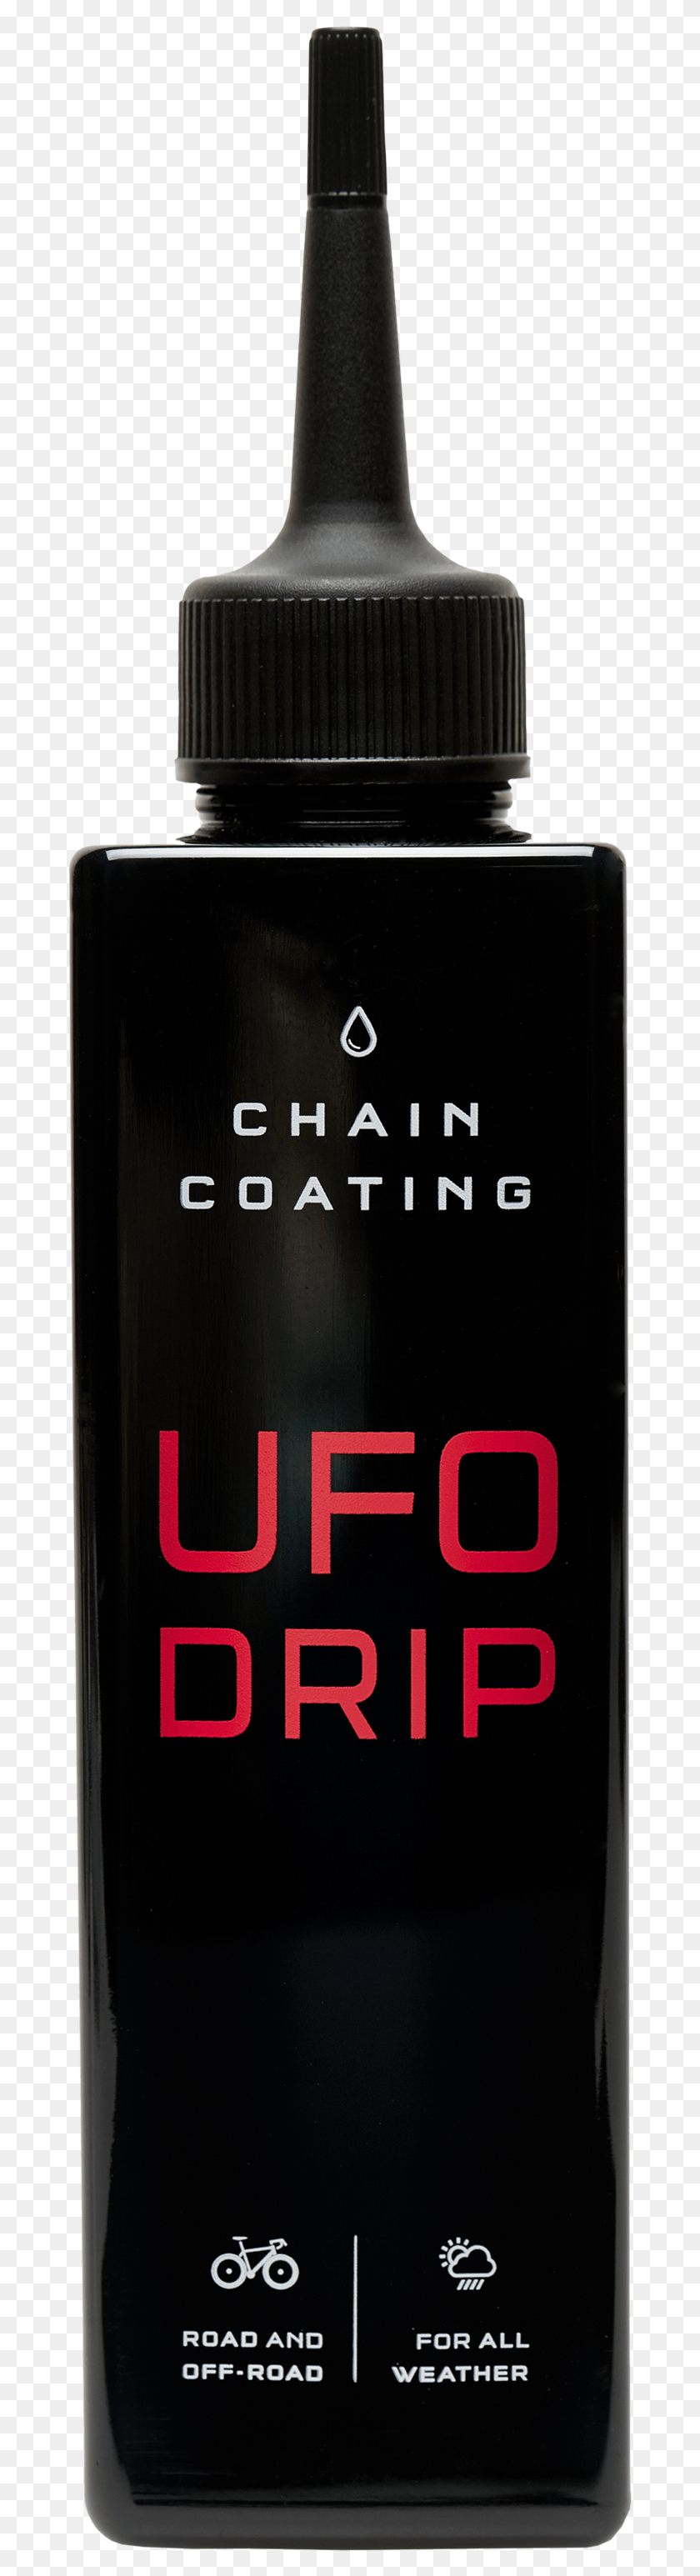 677x3031 Ufo Drip Chain Coating Ceramicspeed Ufo Drip Chain Lube, Tin, Mobile Phone, Phone HD PNG Download